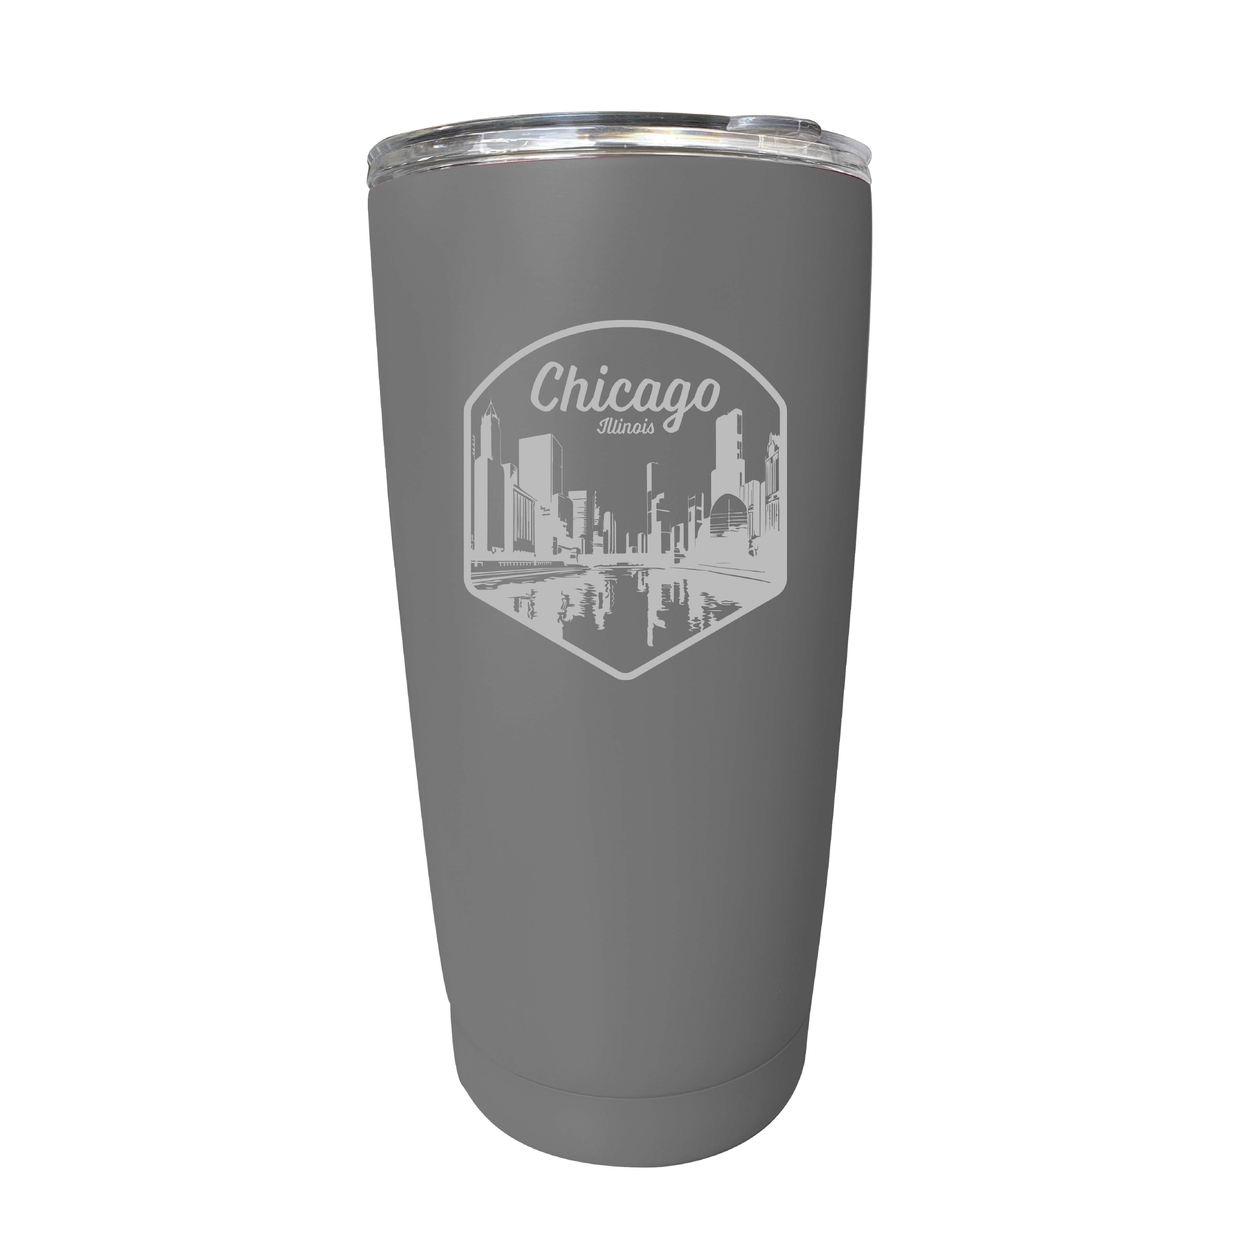 Chicago Illinois Souvenir 16 Oz Engraved Insulated Tumbler - Gray,,Single Unit